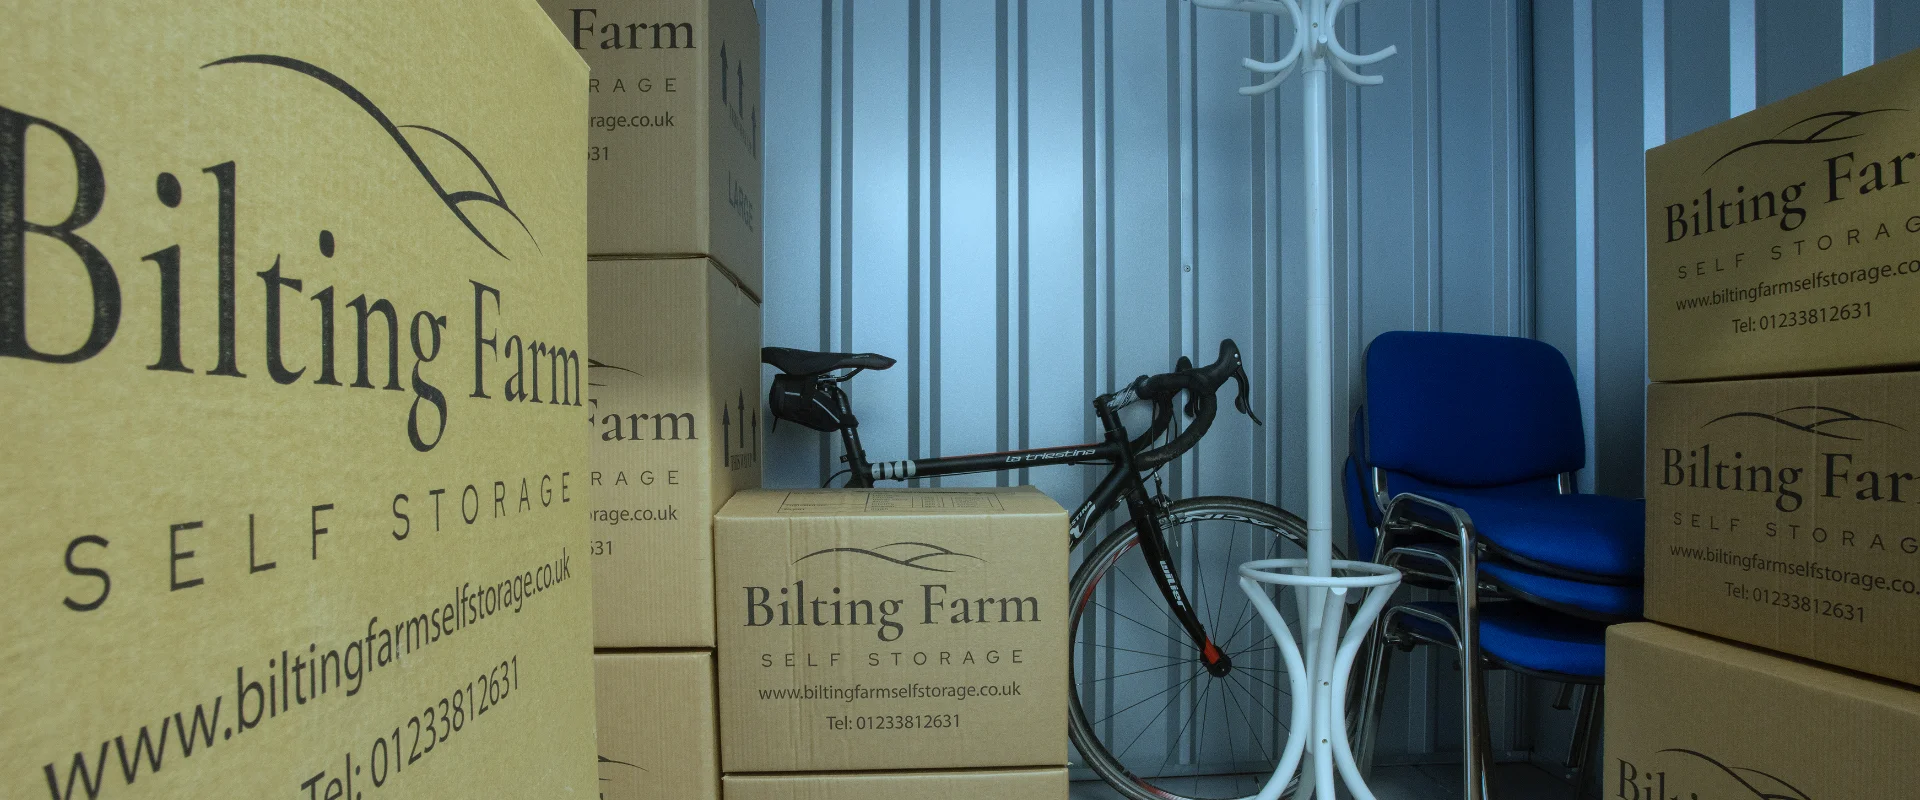 About Bilting Farm Self Storage